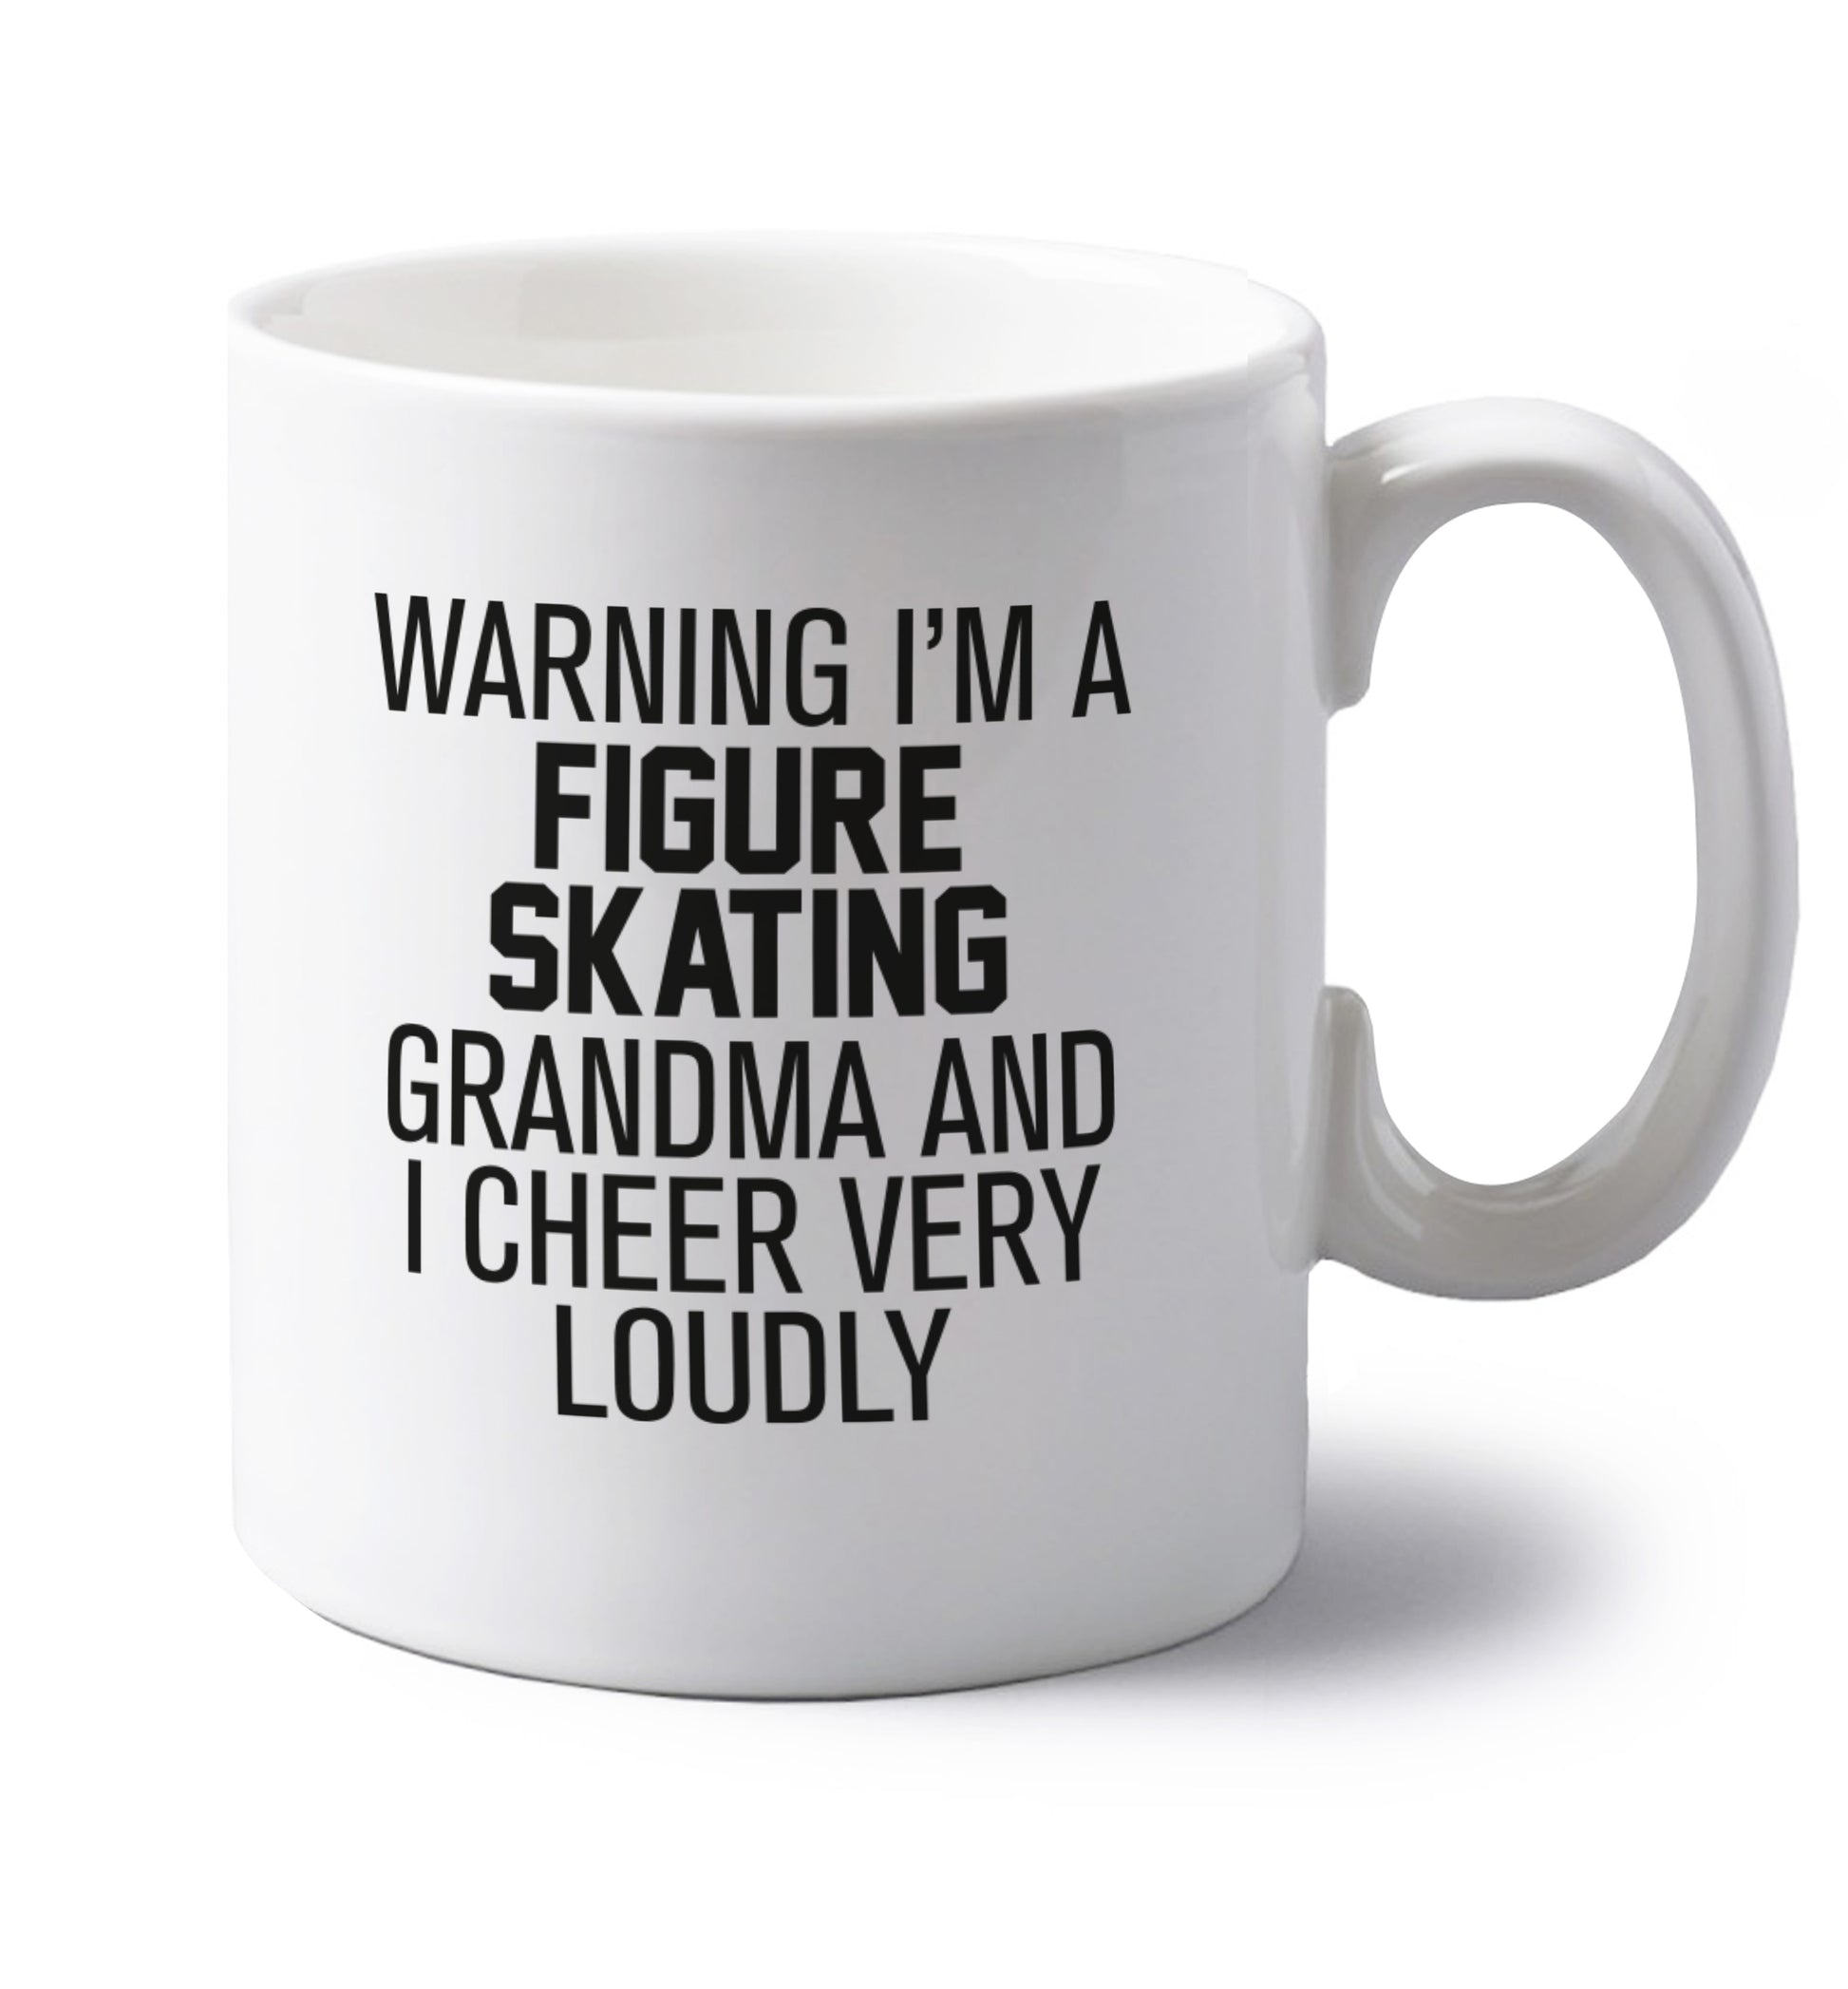 Warning I'm a figure skating grandma and I cheer very loudly left handed white ceramic mug 